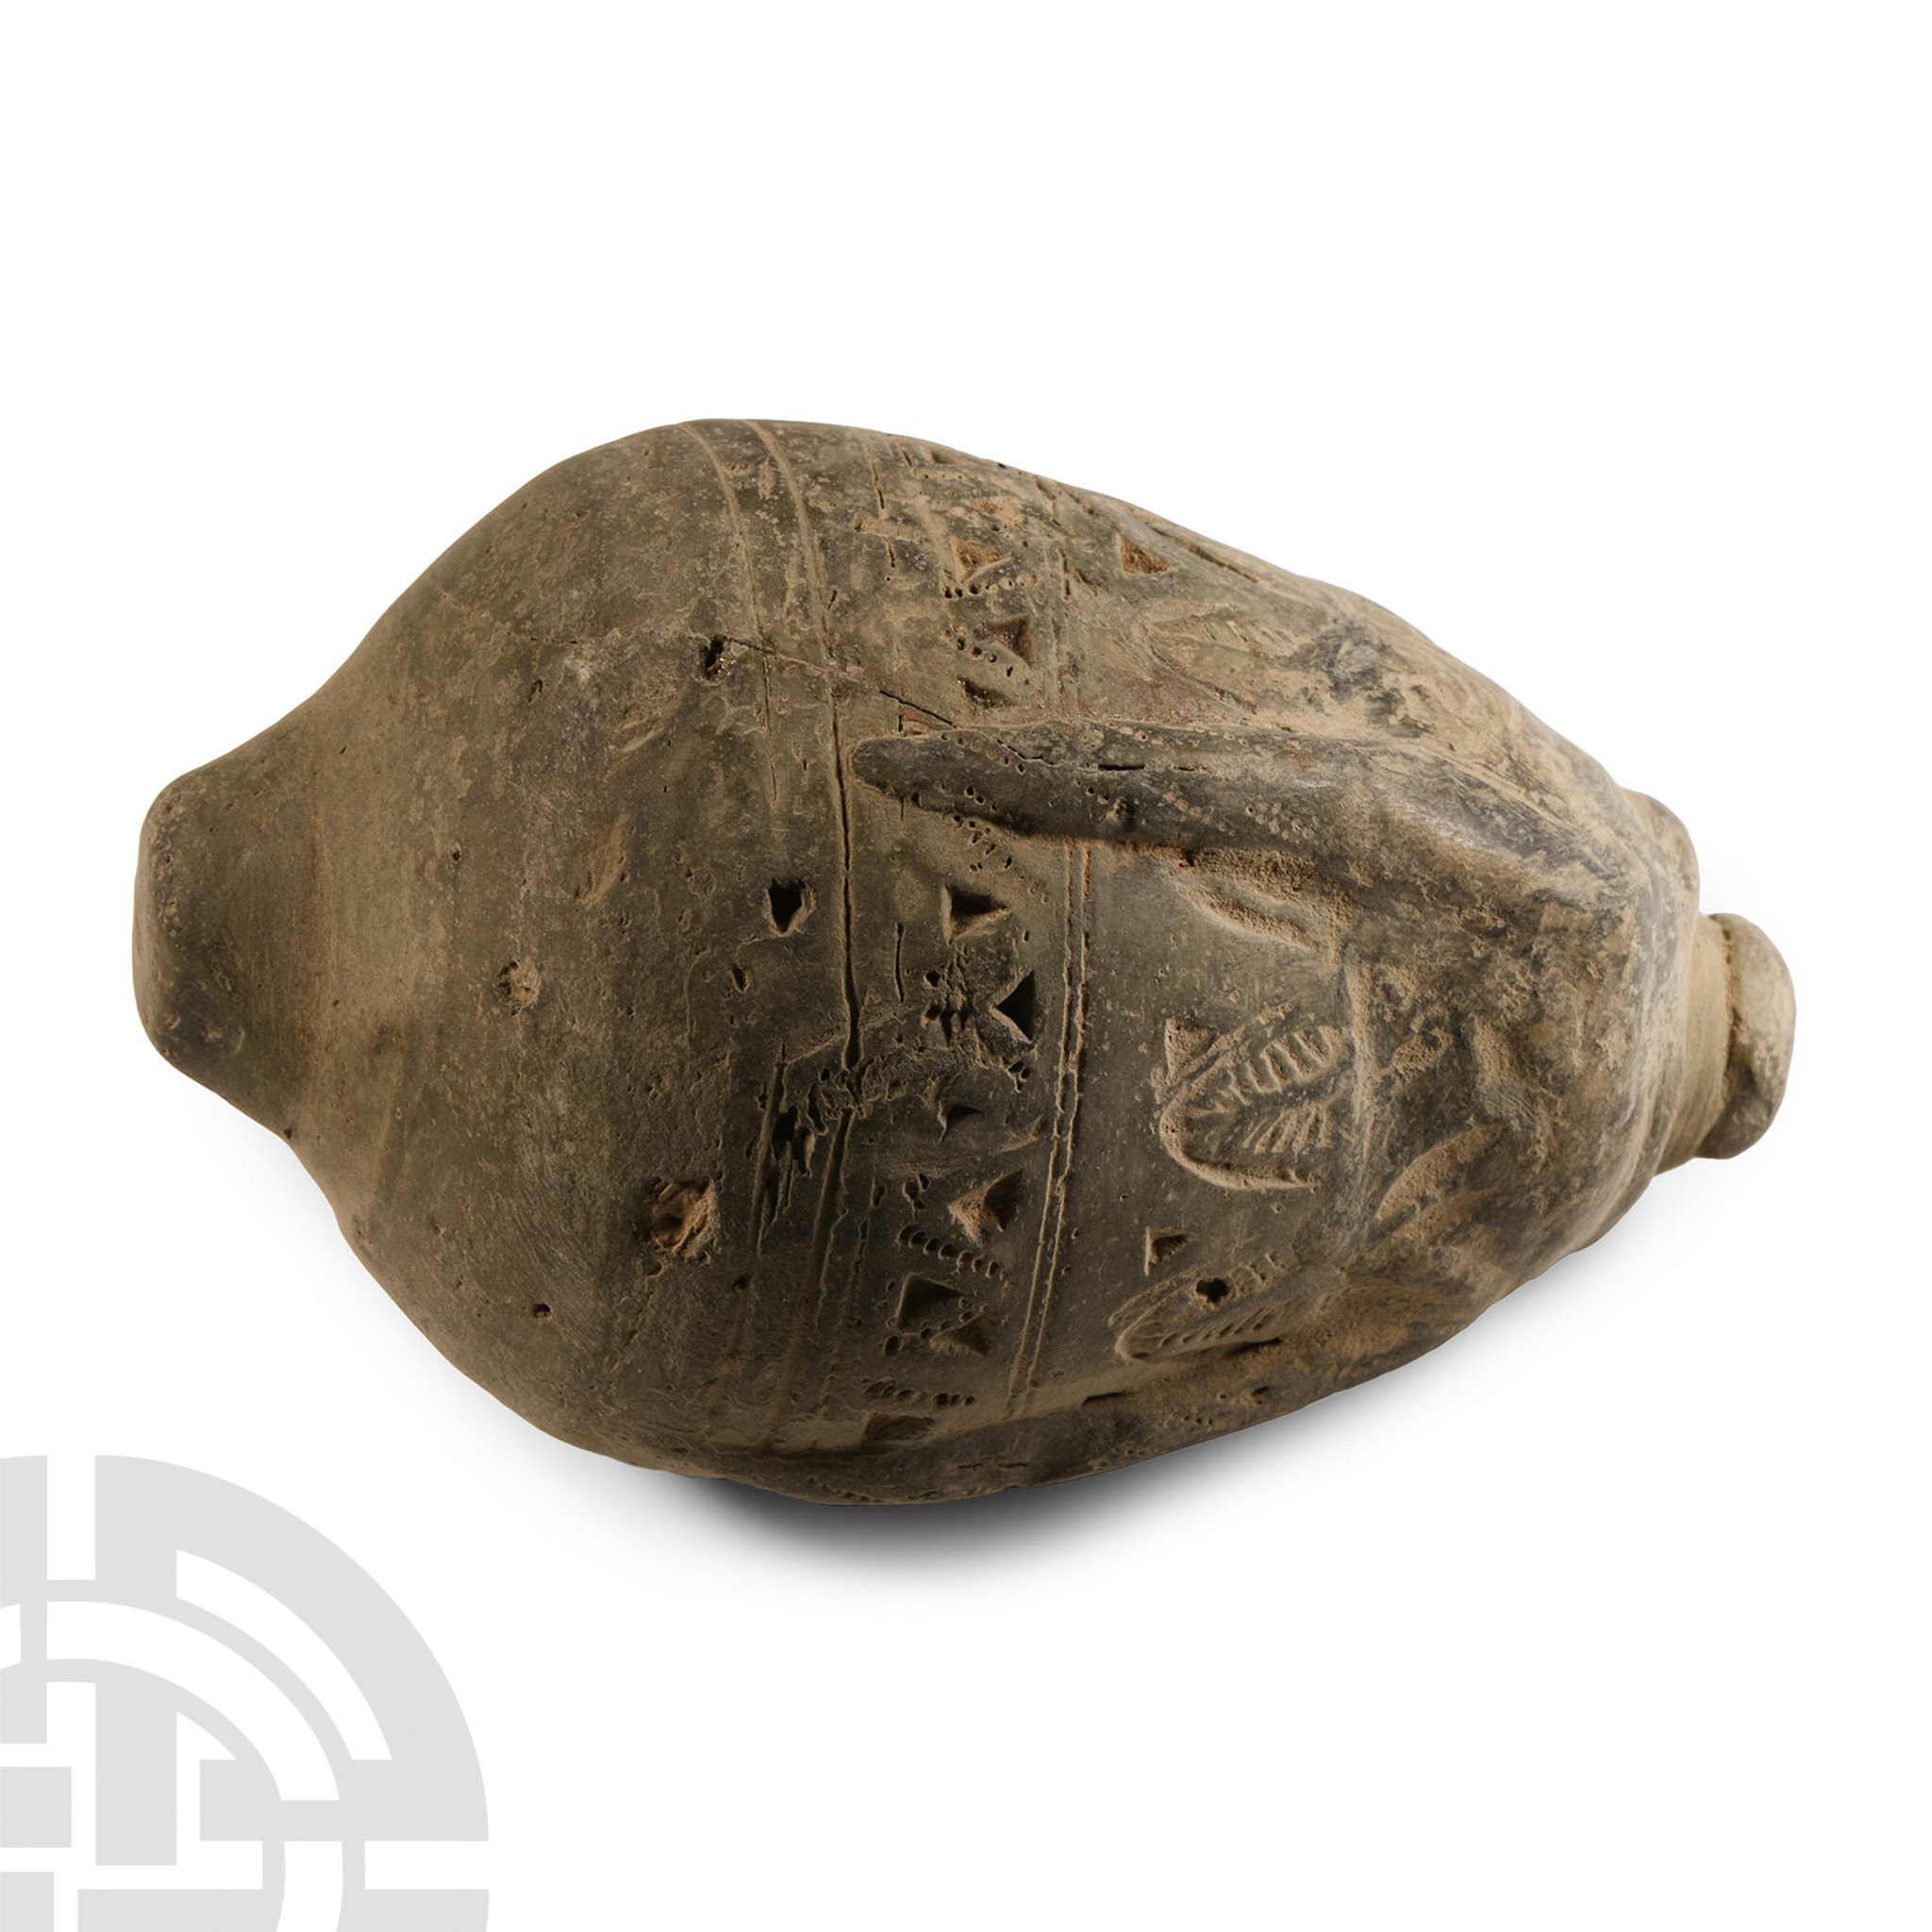 Byzantine 'Greek Fire' Ceramic Fire Bomb or Hand Grenade